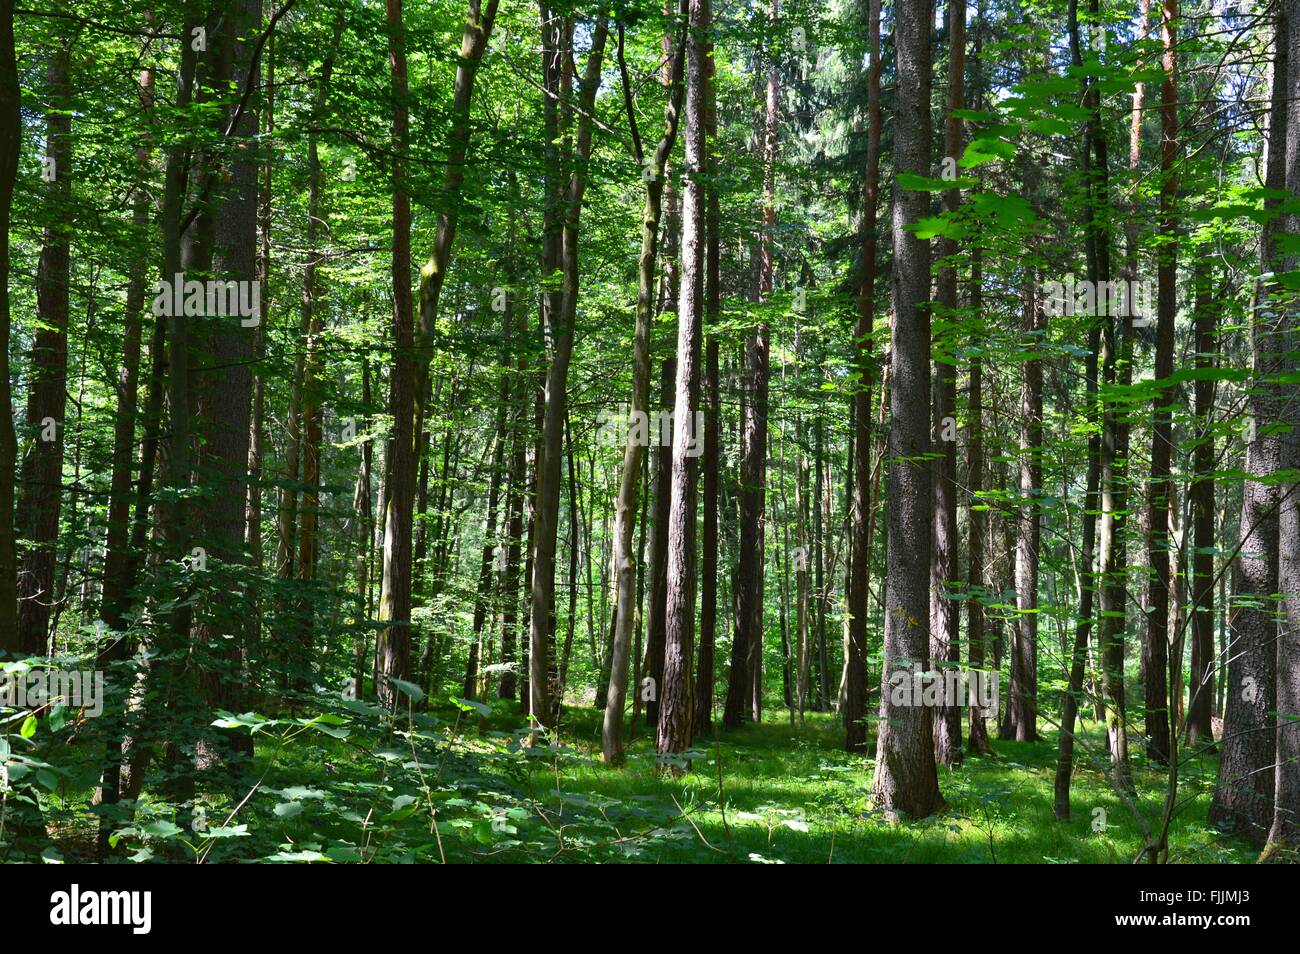 nice trees view Stock Photo - Alamy